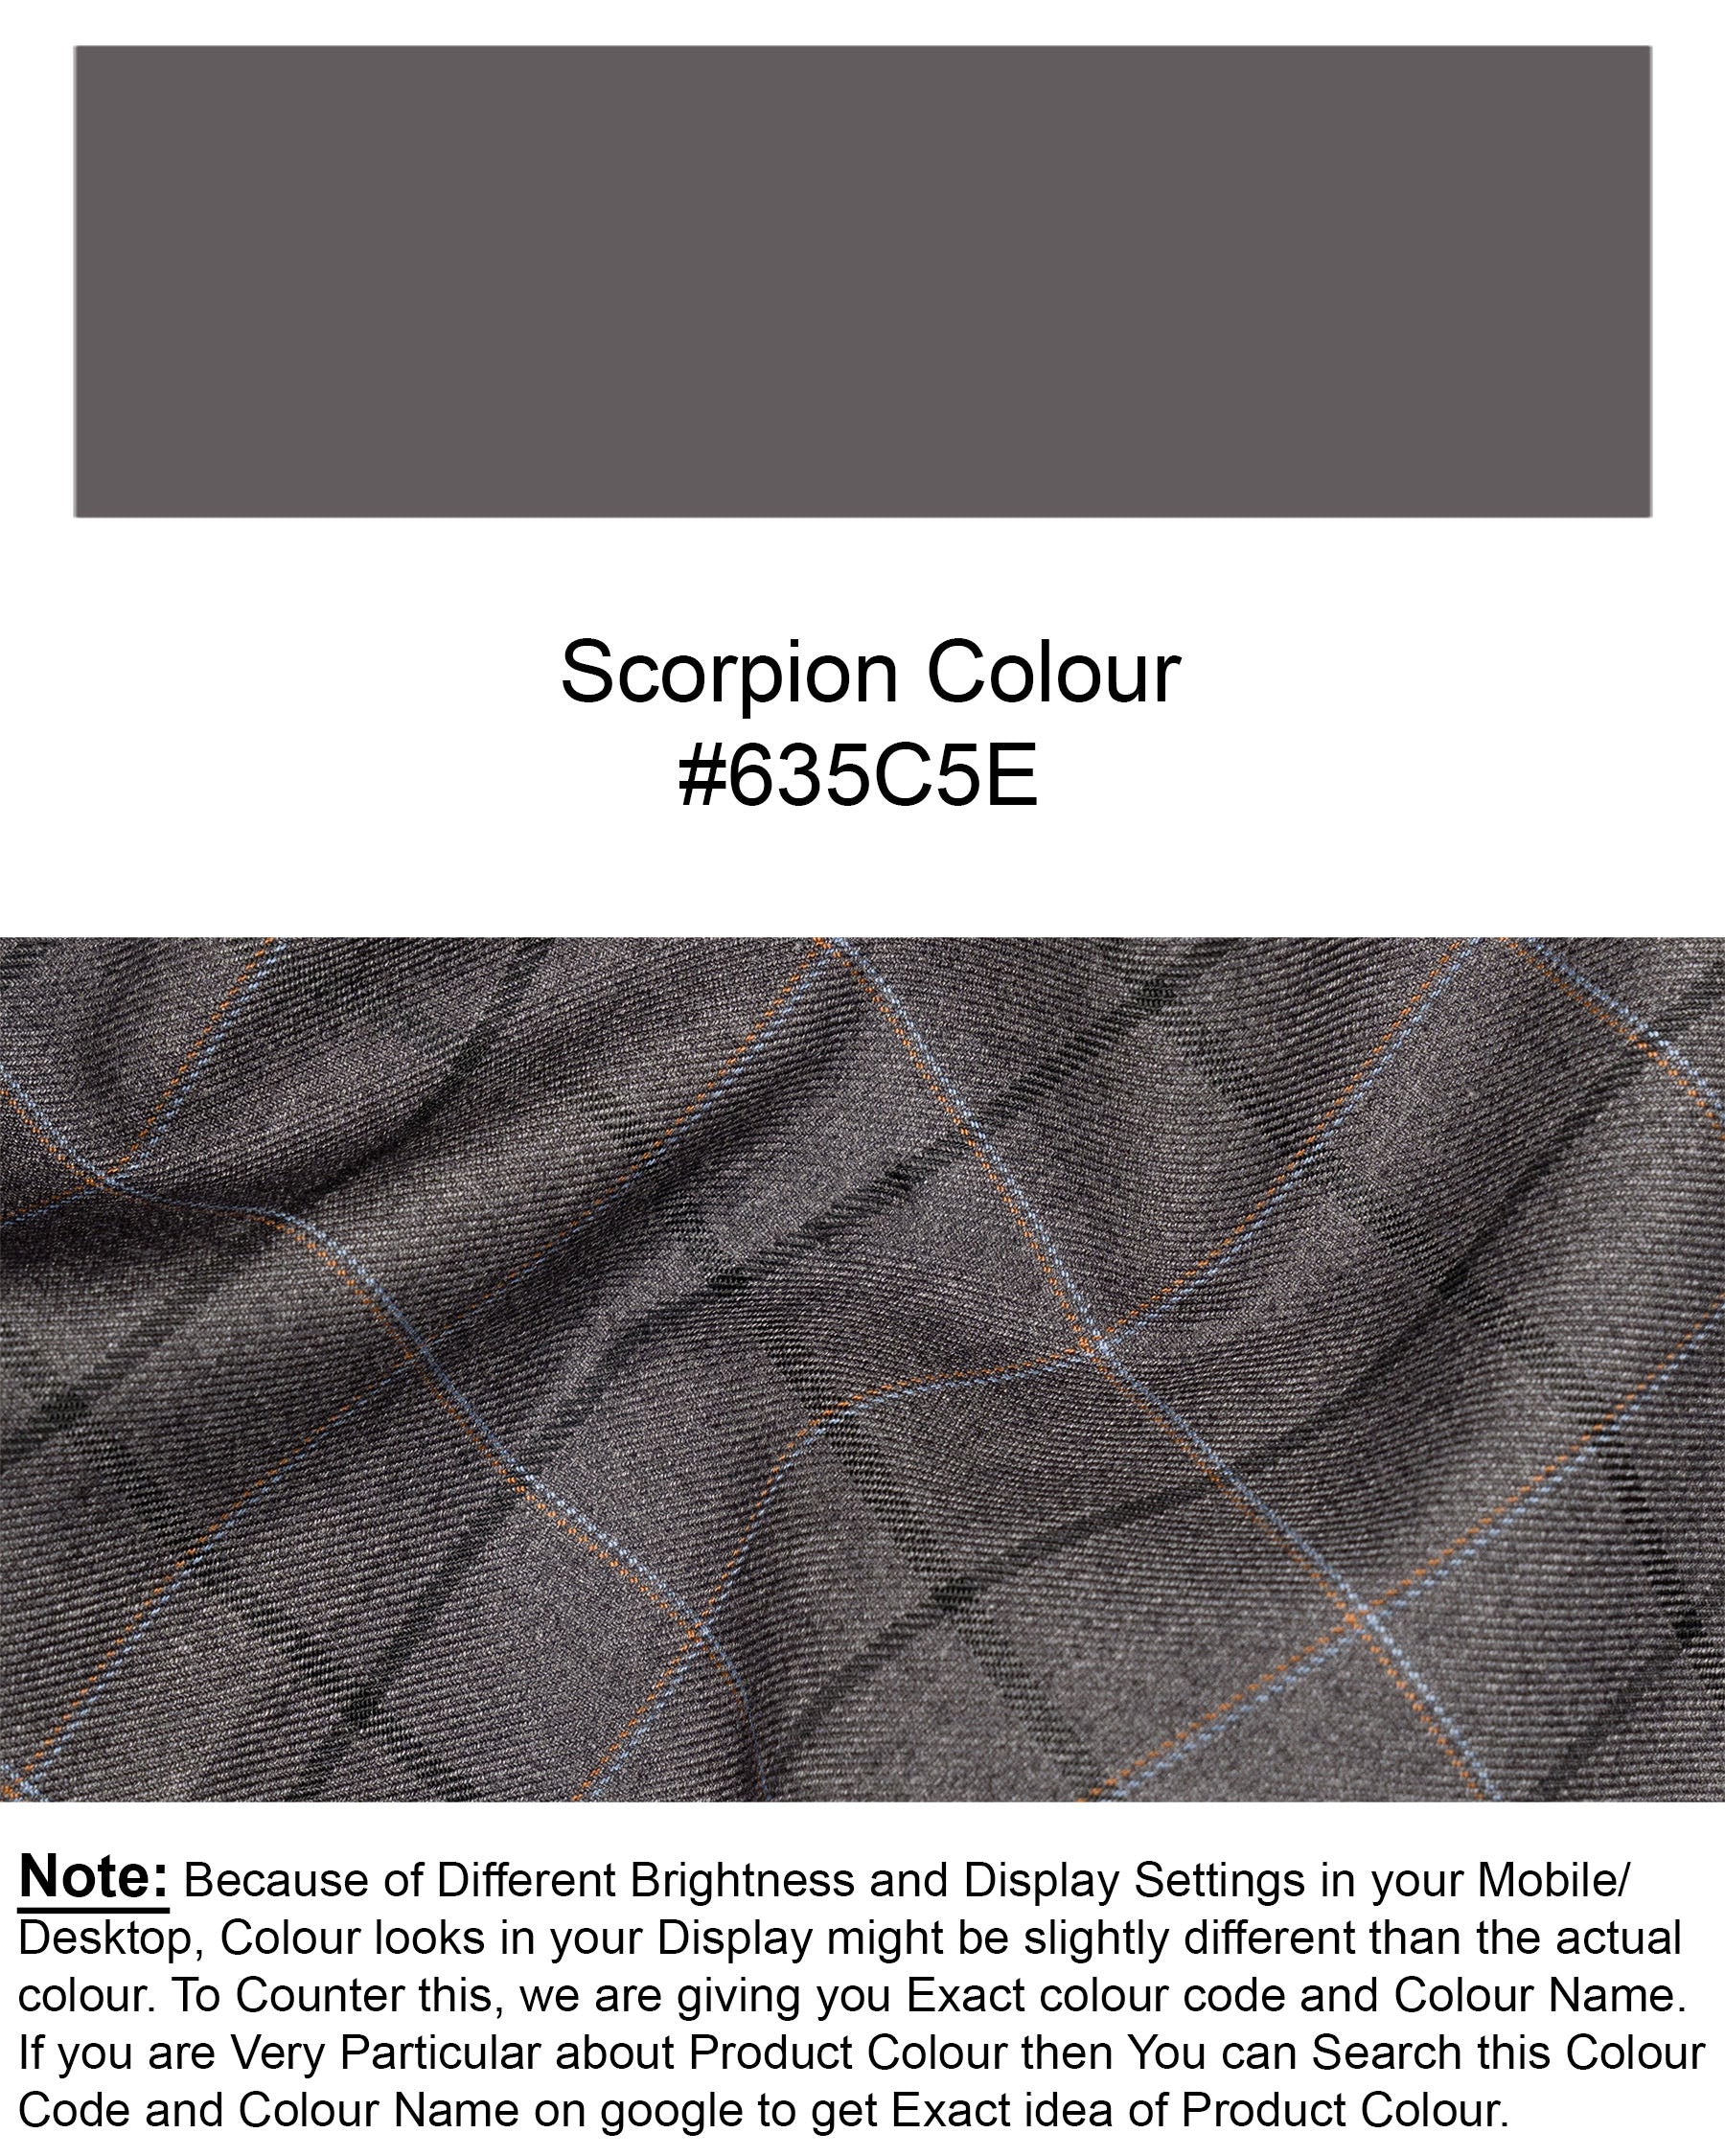 Scorpion Grey Super fine Plaid Woolrich Waistcoat V1632-36, V1632-38, V1632-40, V1632-42, V1632-44, V1632-46, V1632-48, V1632-50, V1632-52, V1632-54, V1632-56, V1632-58, V1632-60